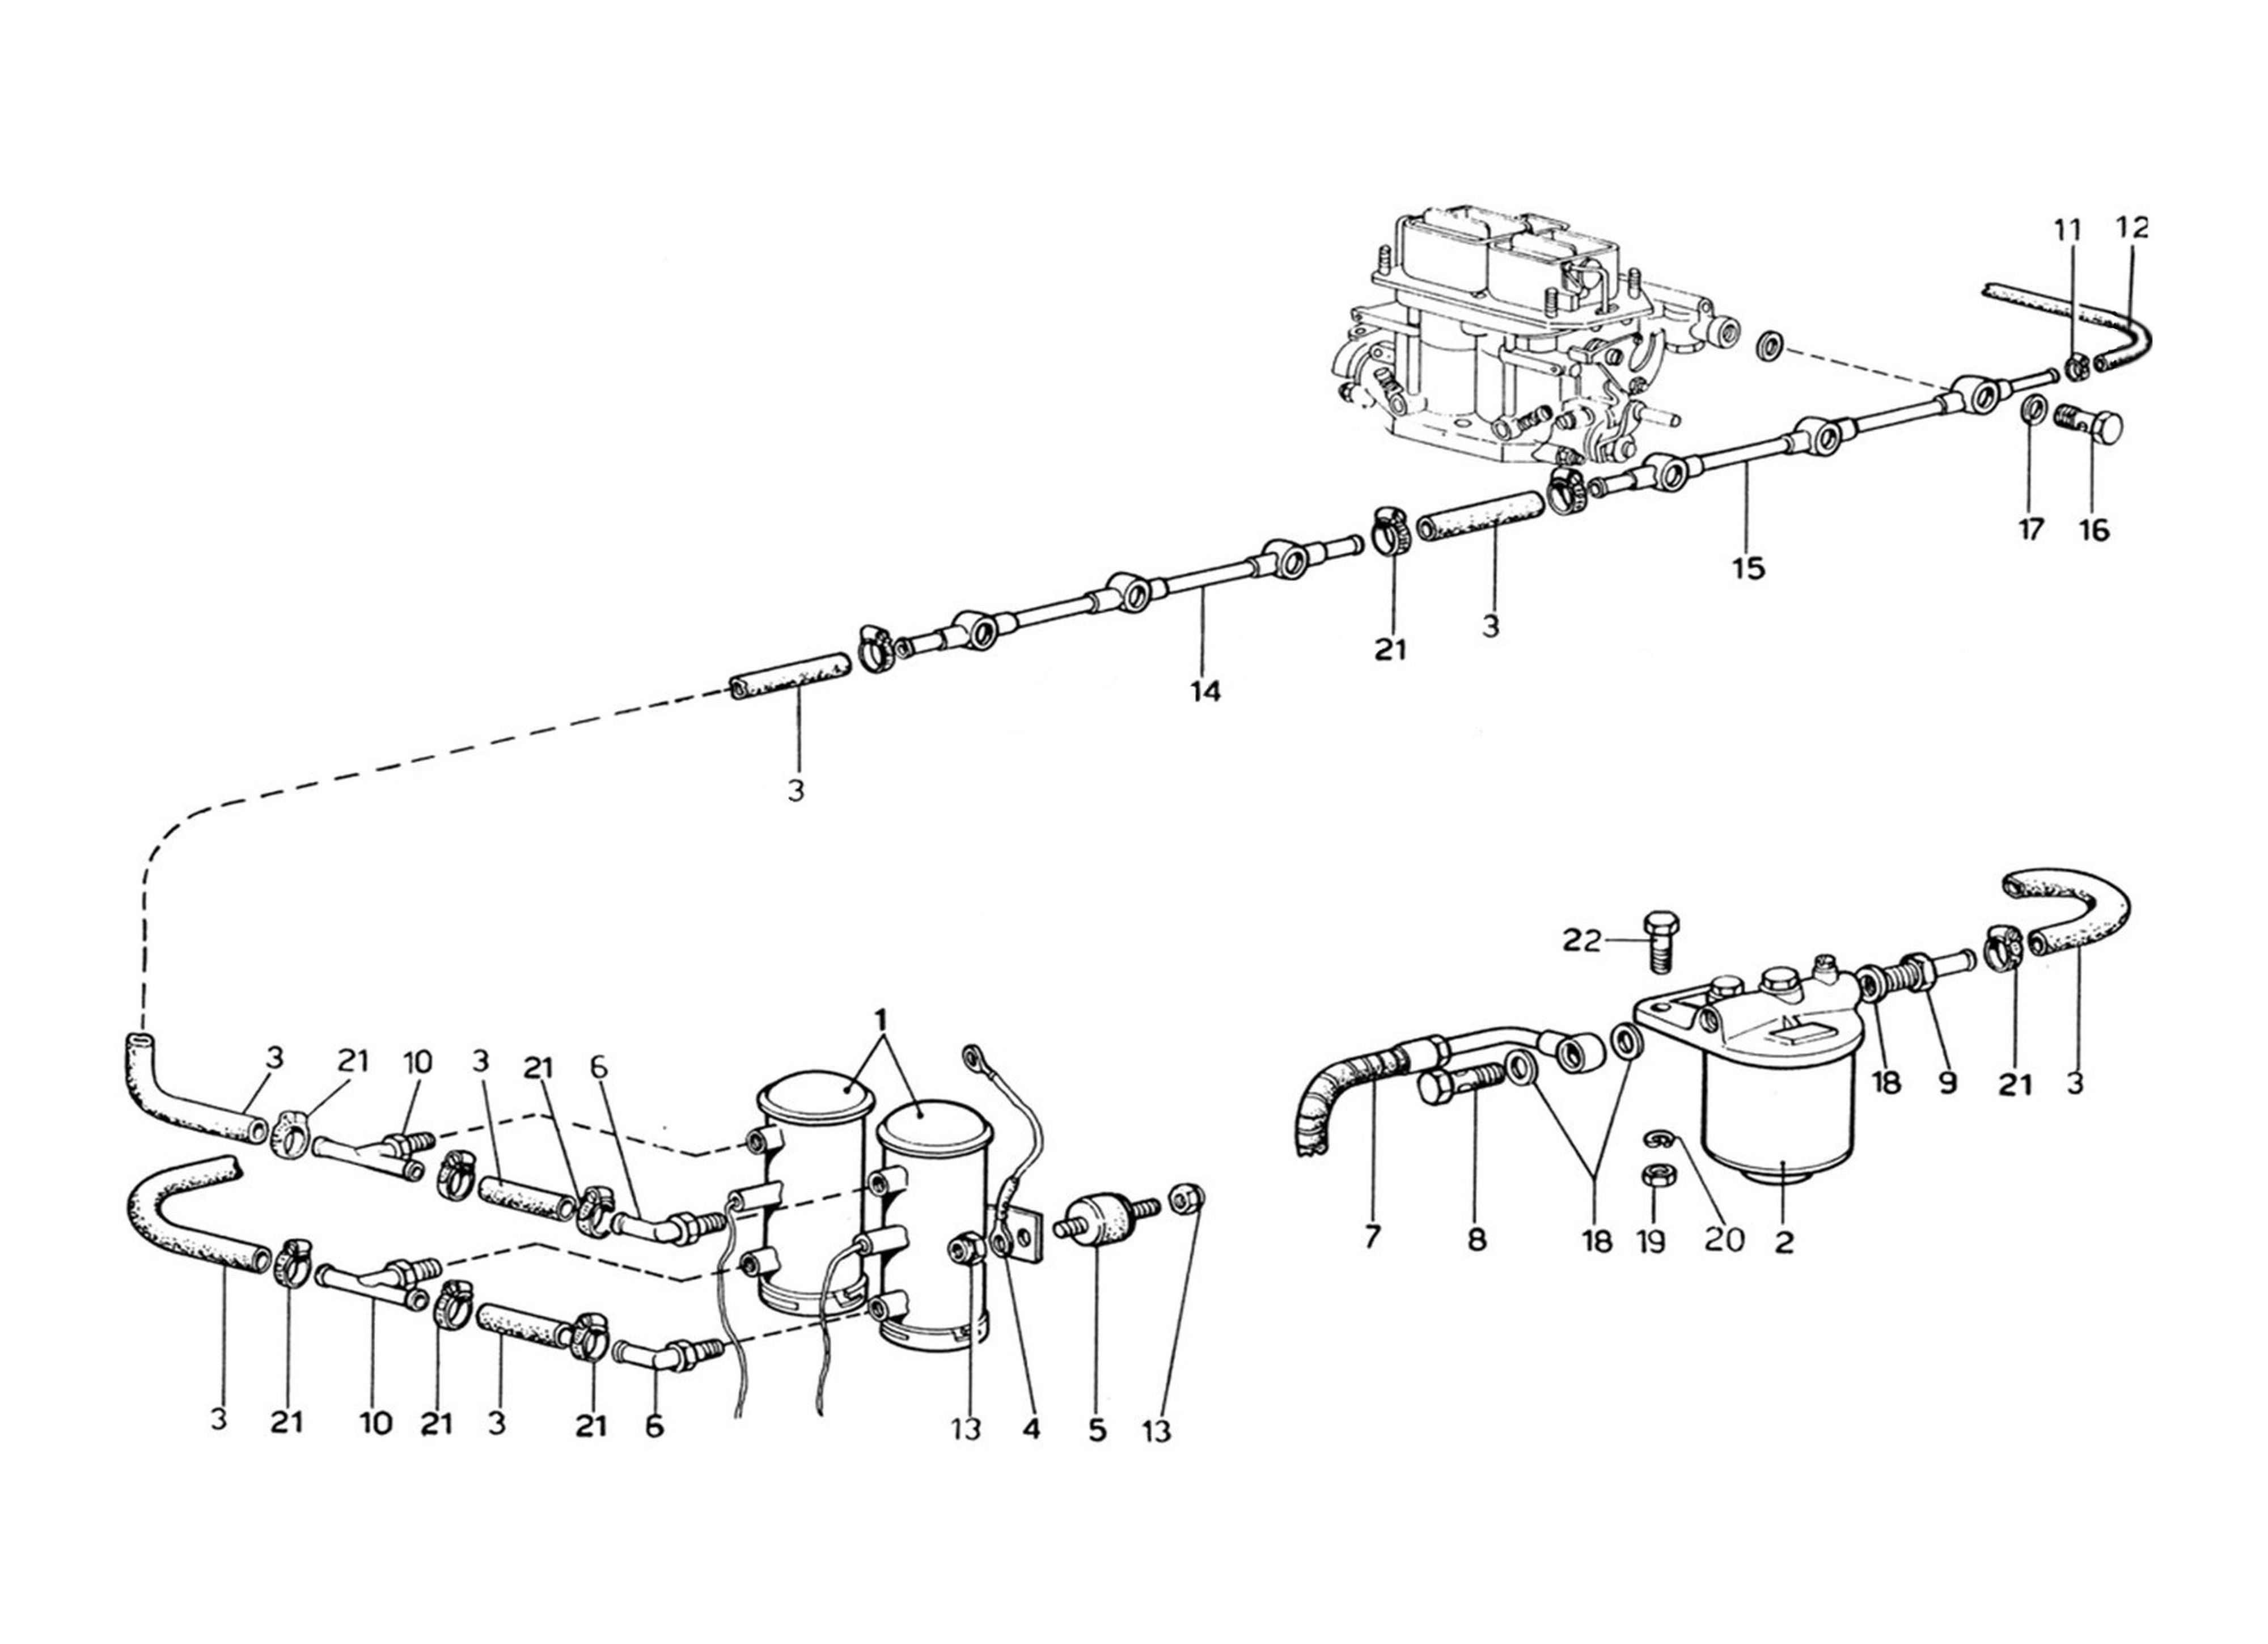 Schematic: Fuel Pumps & Fuel Pipes (1974 Revision)